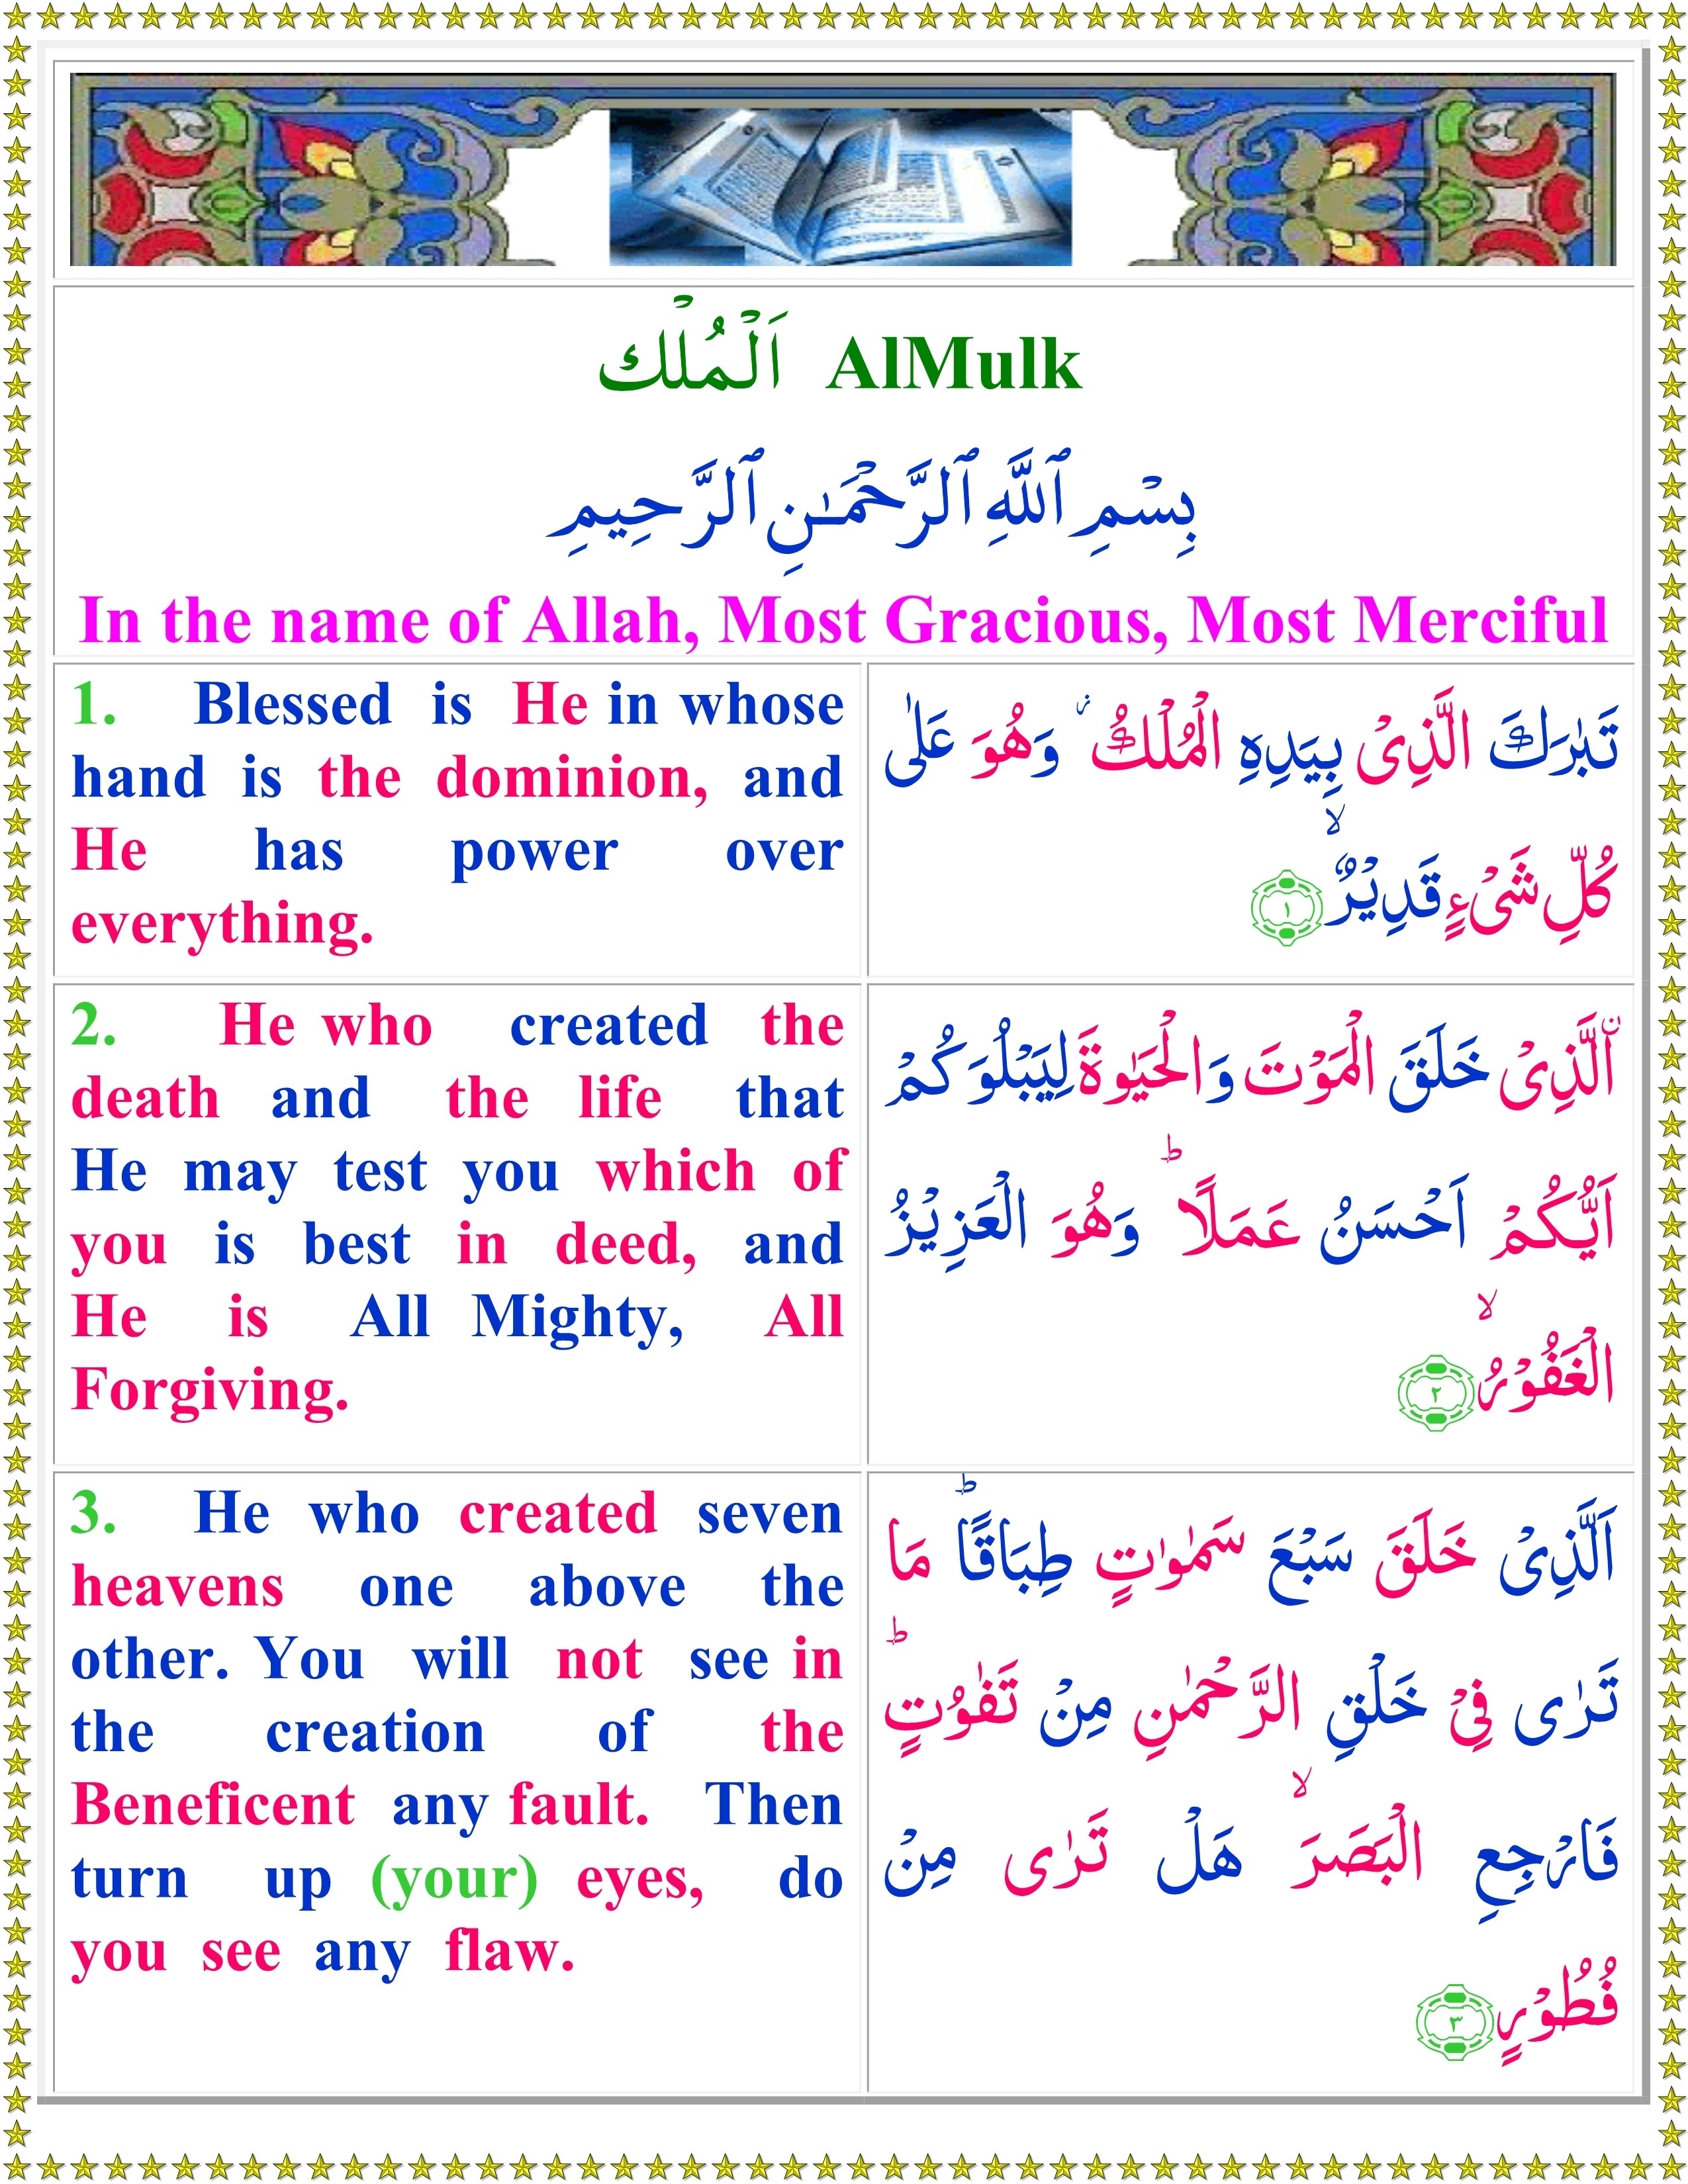 Read Surah Al Mulk With English Translation - Quran o Sunnat